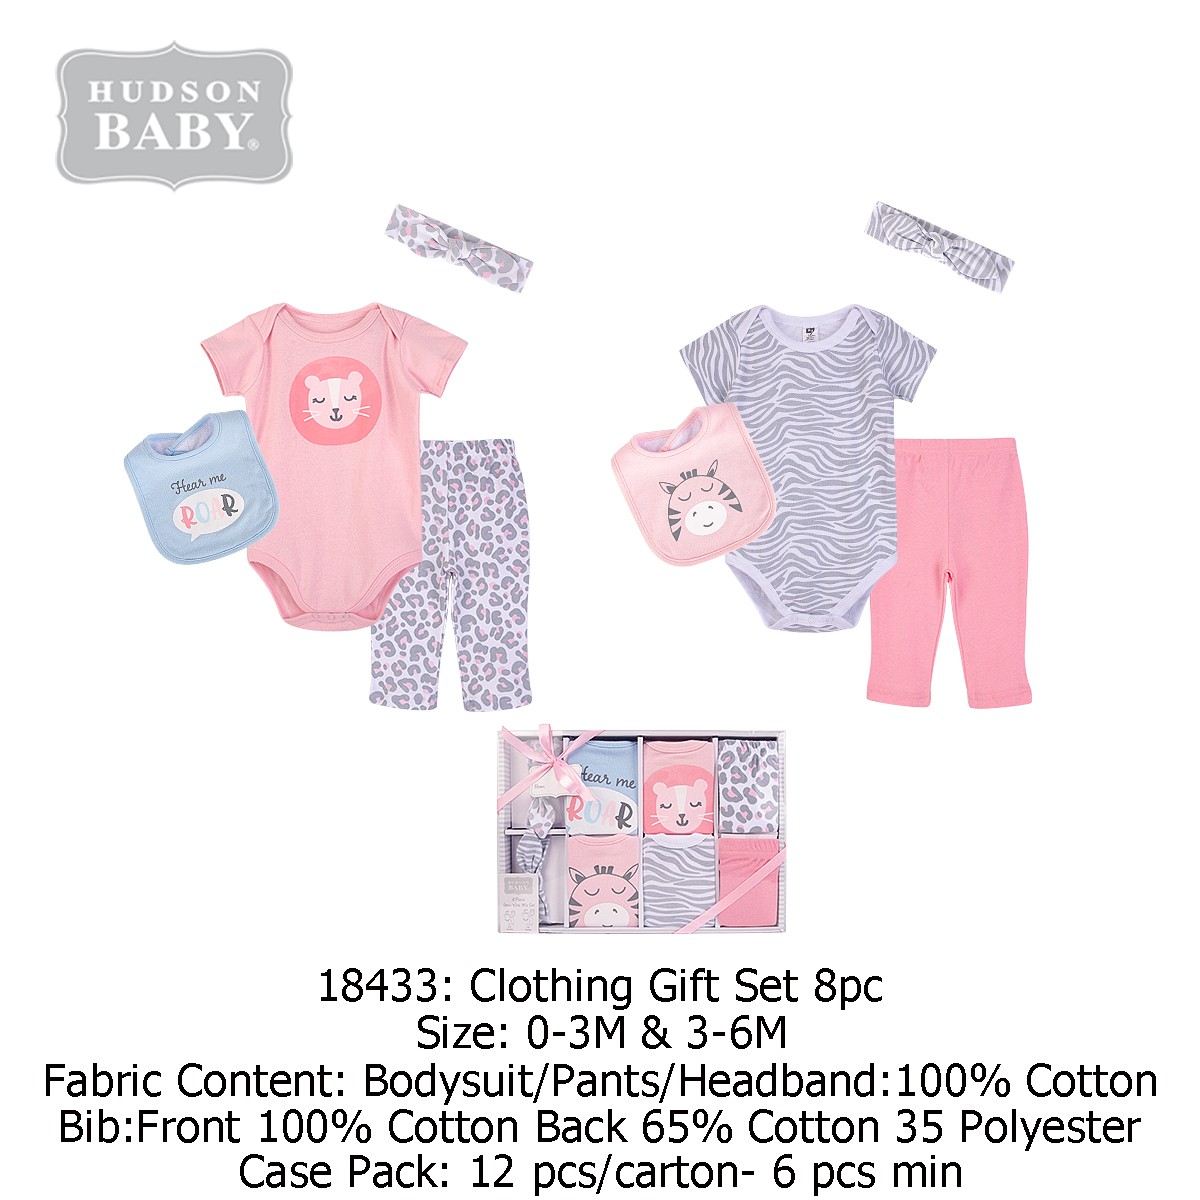 Hudson Baby 18433 Clothing Gift Set 8pcs (0-3M & 3-6M)